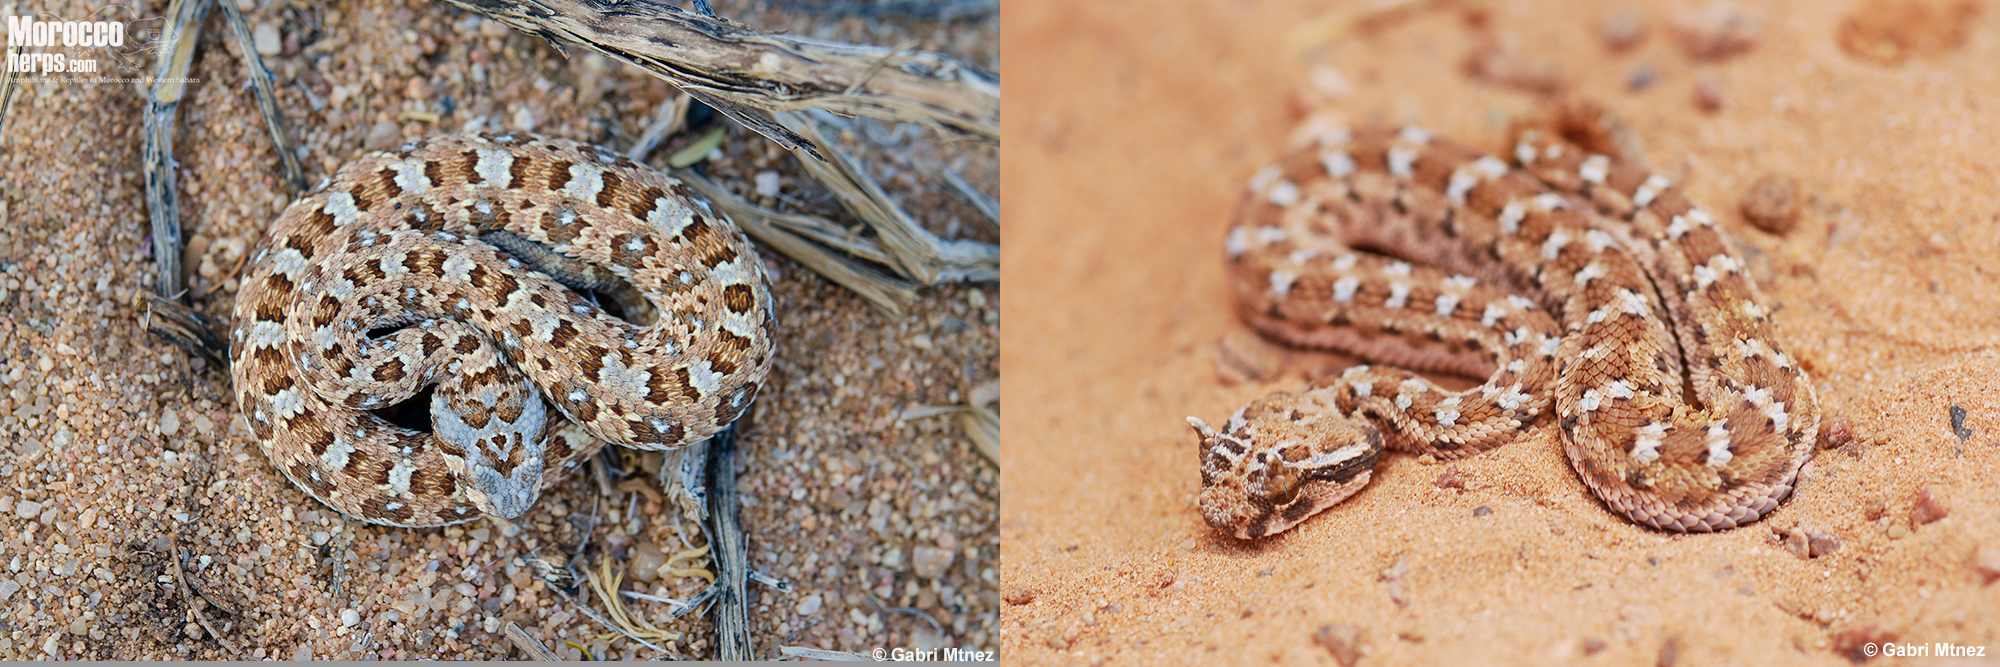 Bitis-caudalis-Namibia-Cerastes-cerastes- Morocco